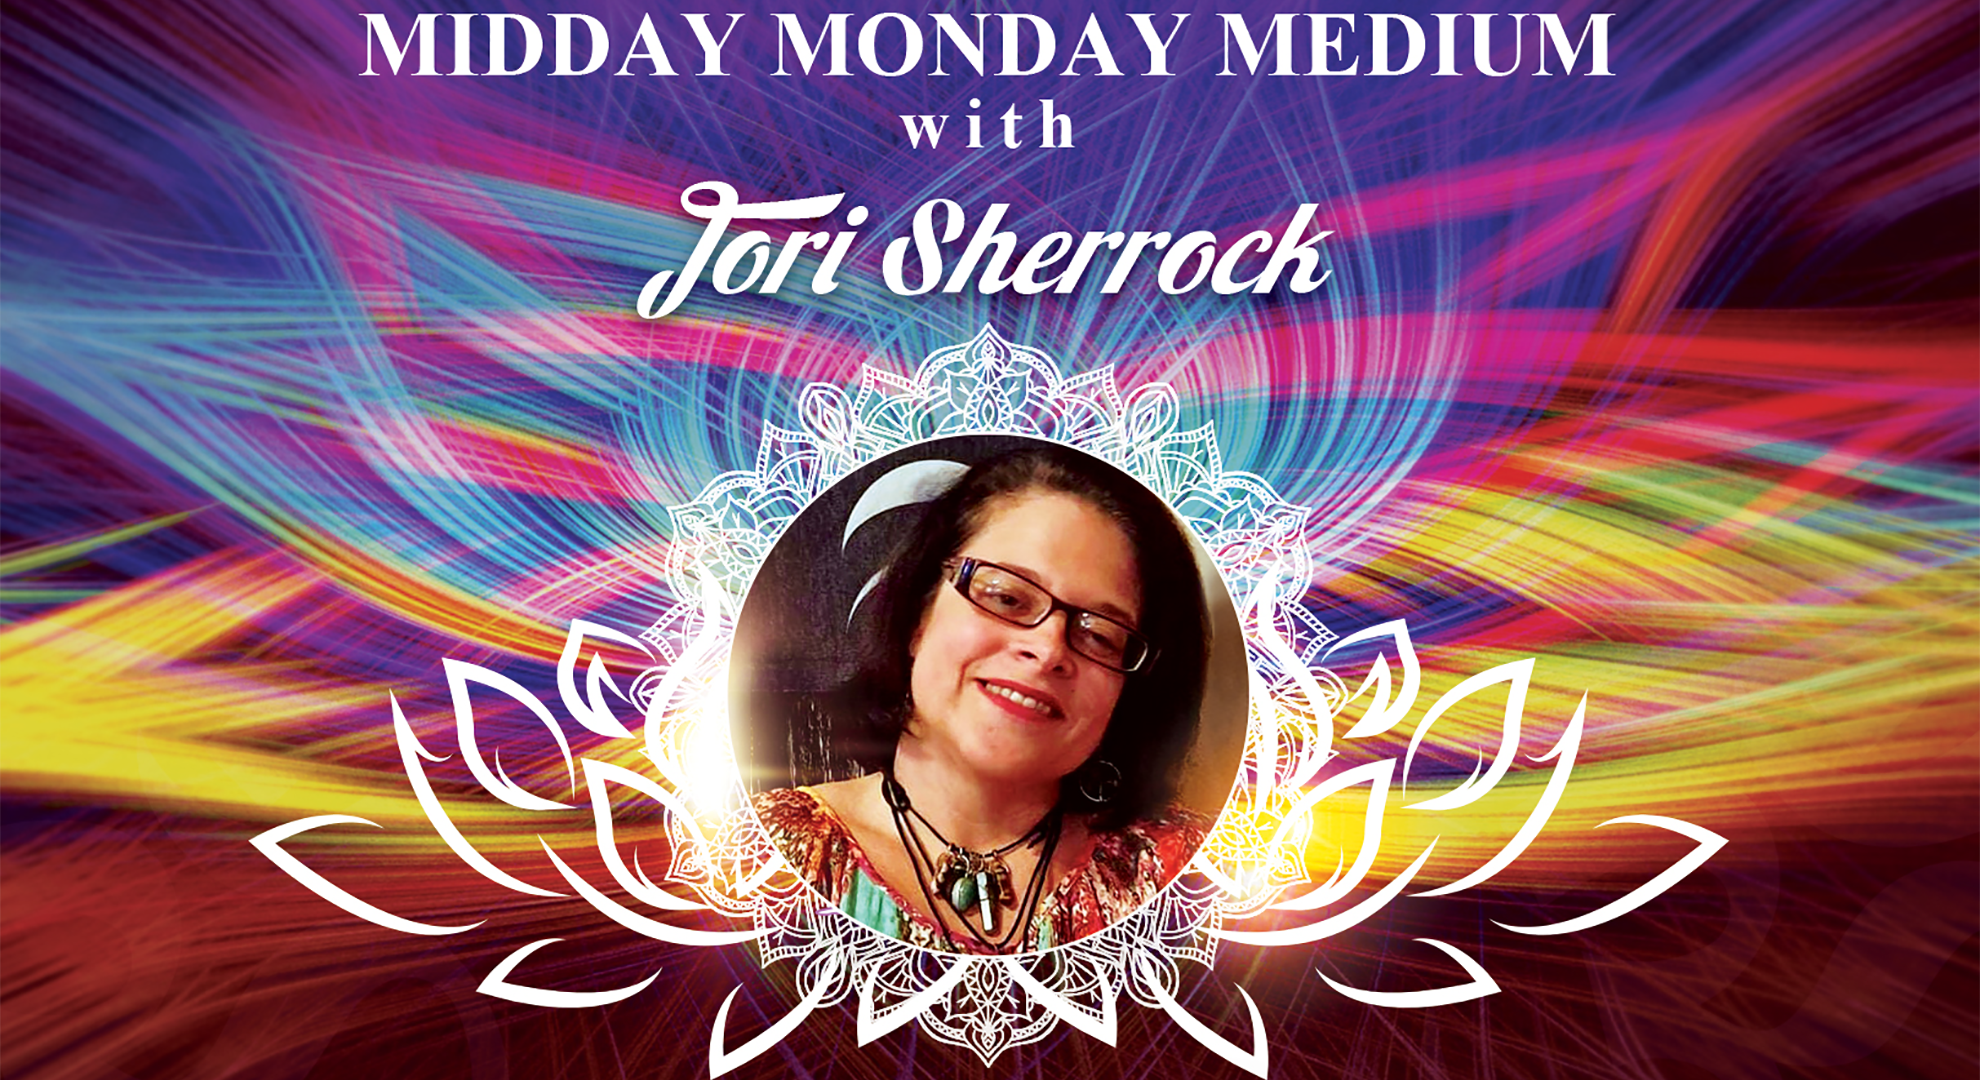 Midday Monday Medium with Tori Sherrock